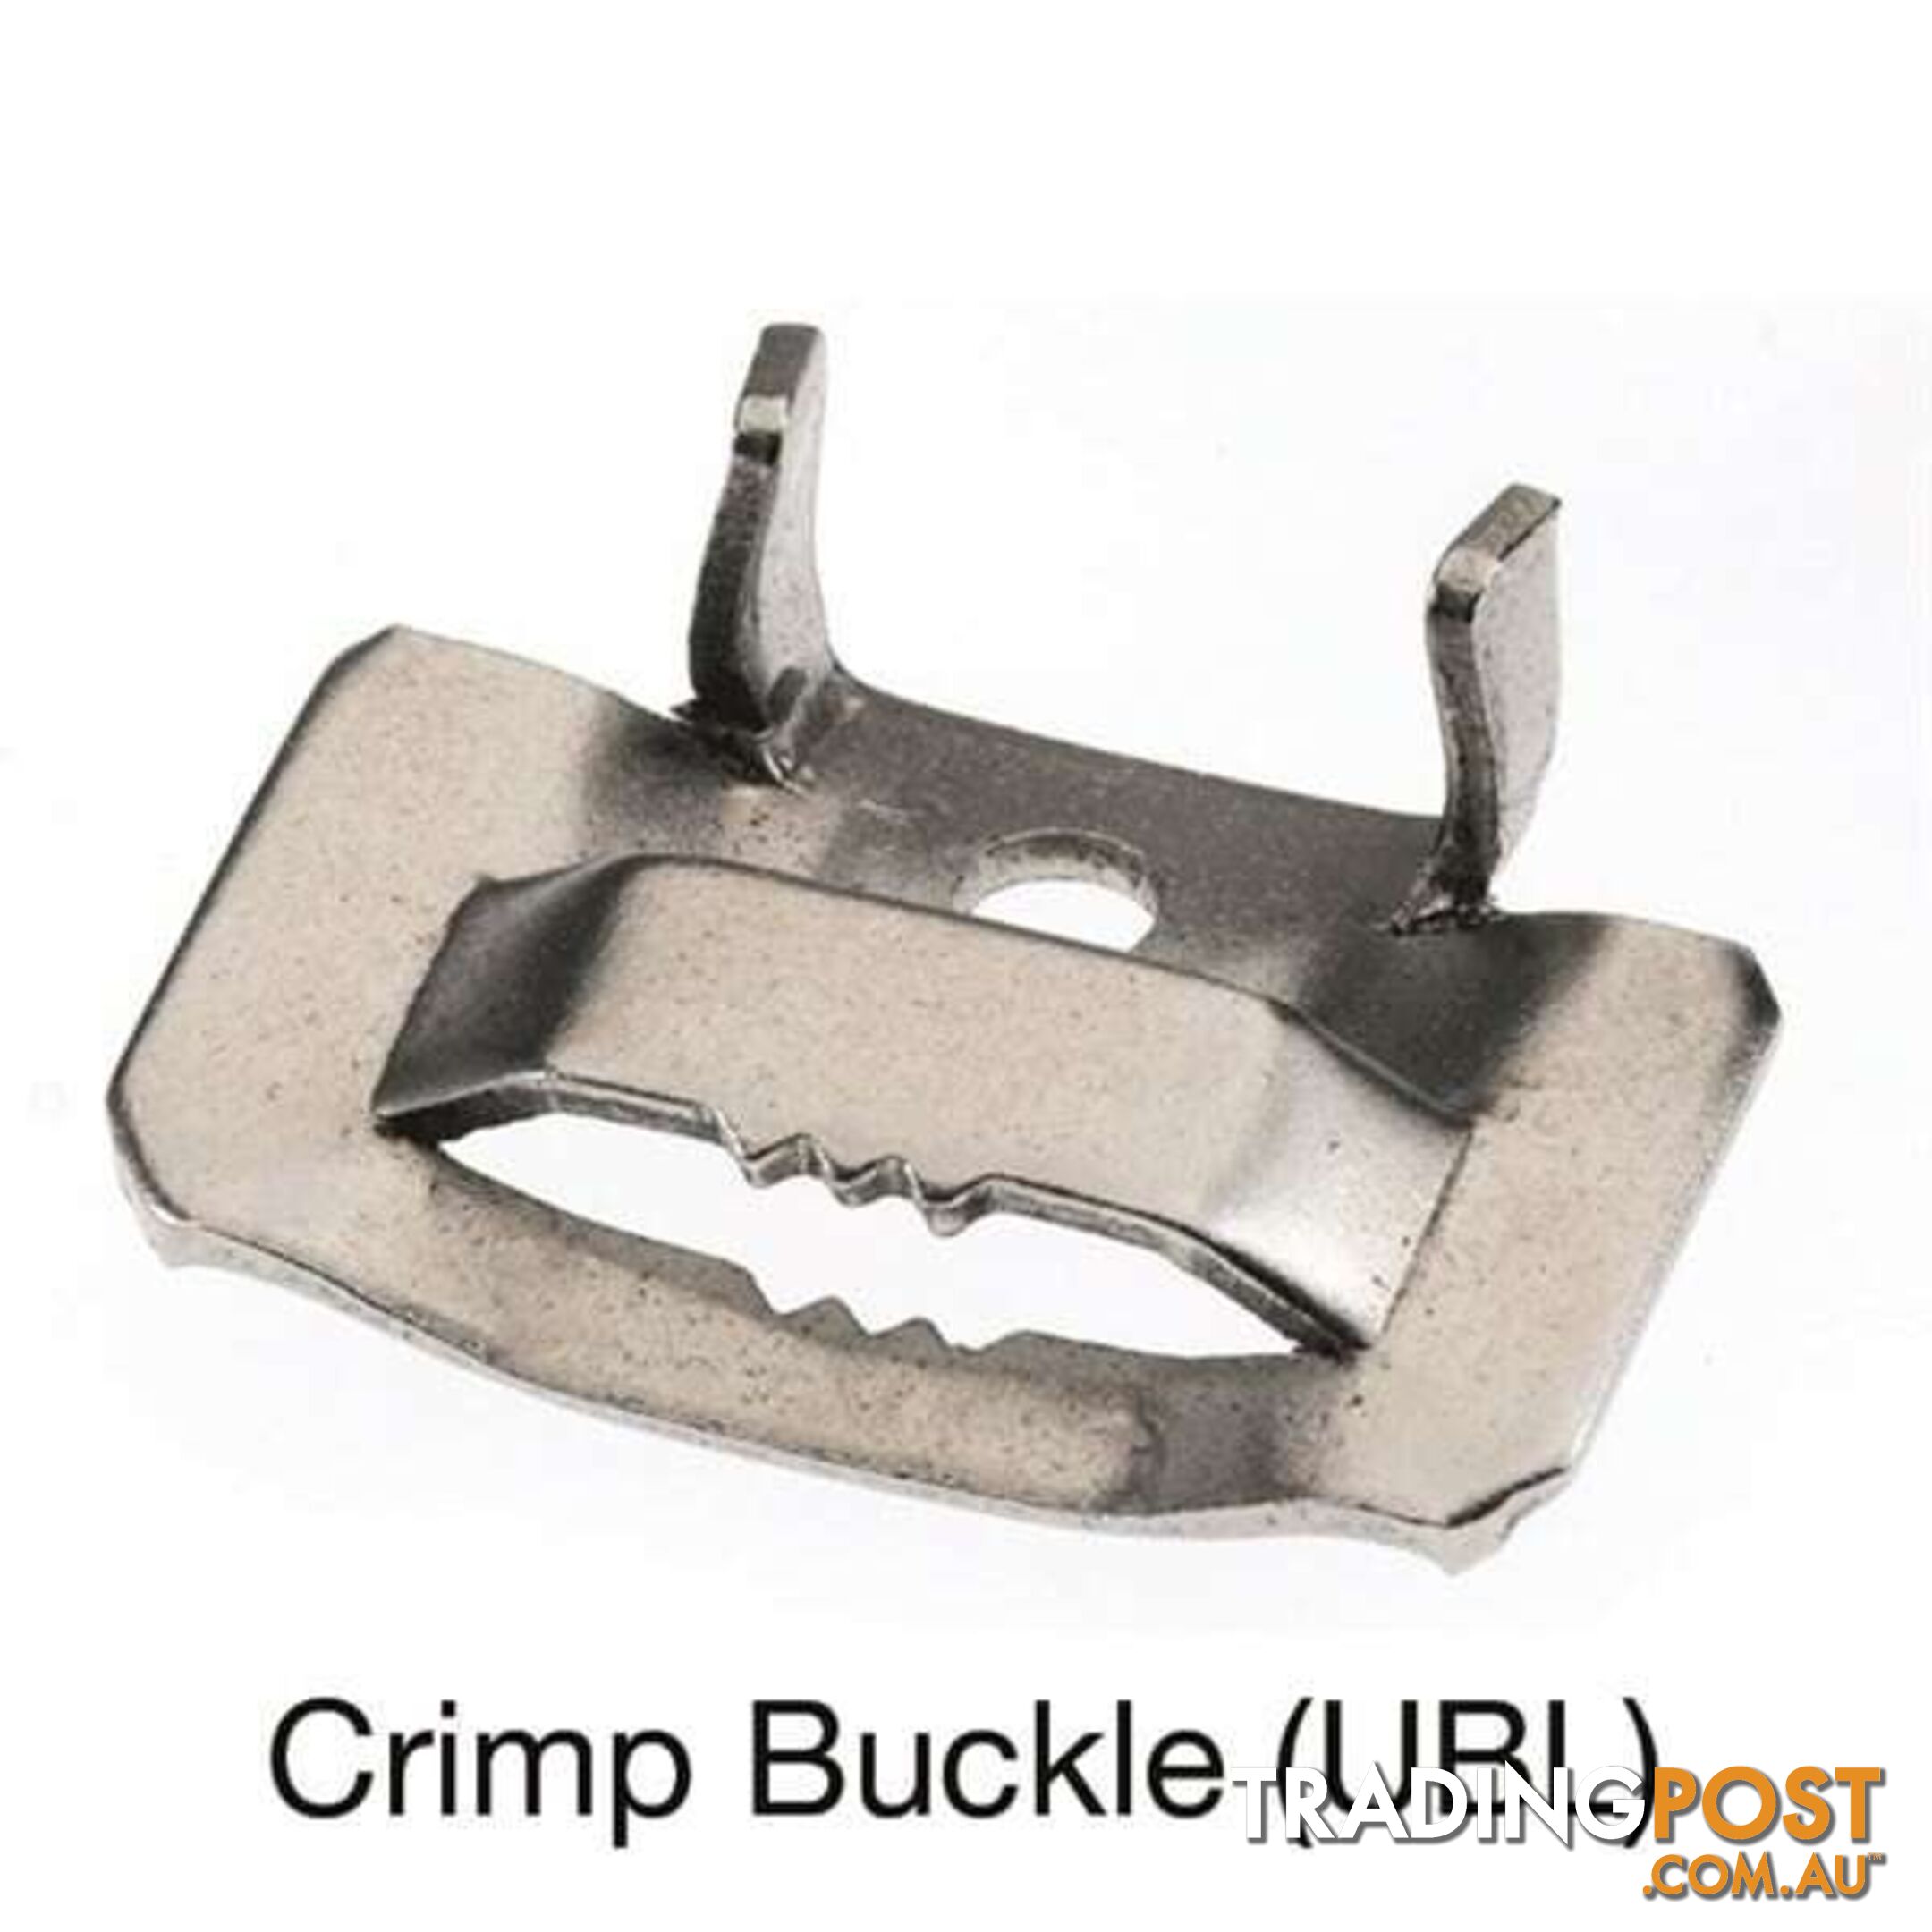 Tridon Crimp Buckle to suit 15.9mm (5/8 ") x 0.75mm 100 Pieces SKU - UBL010100